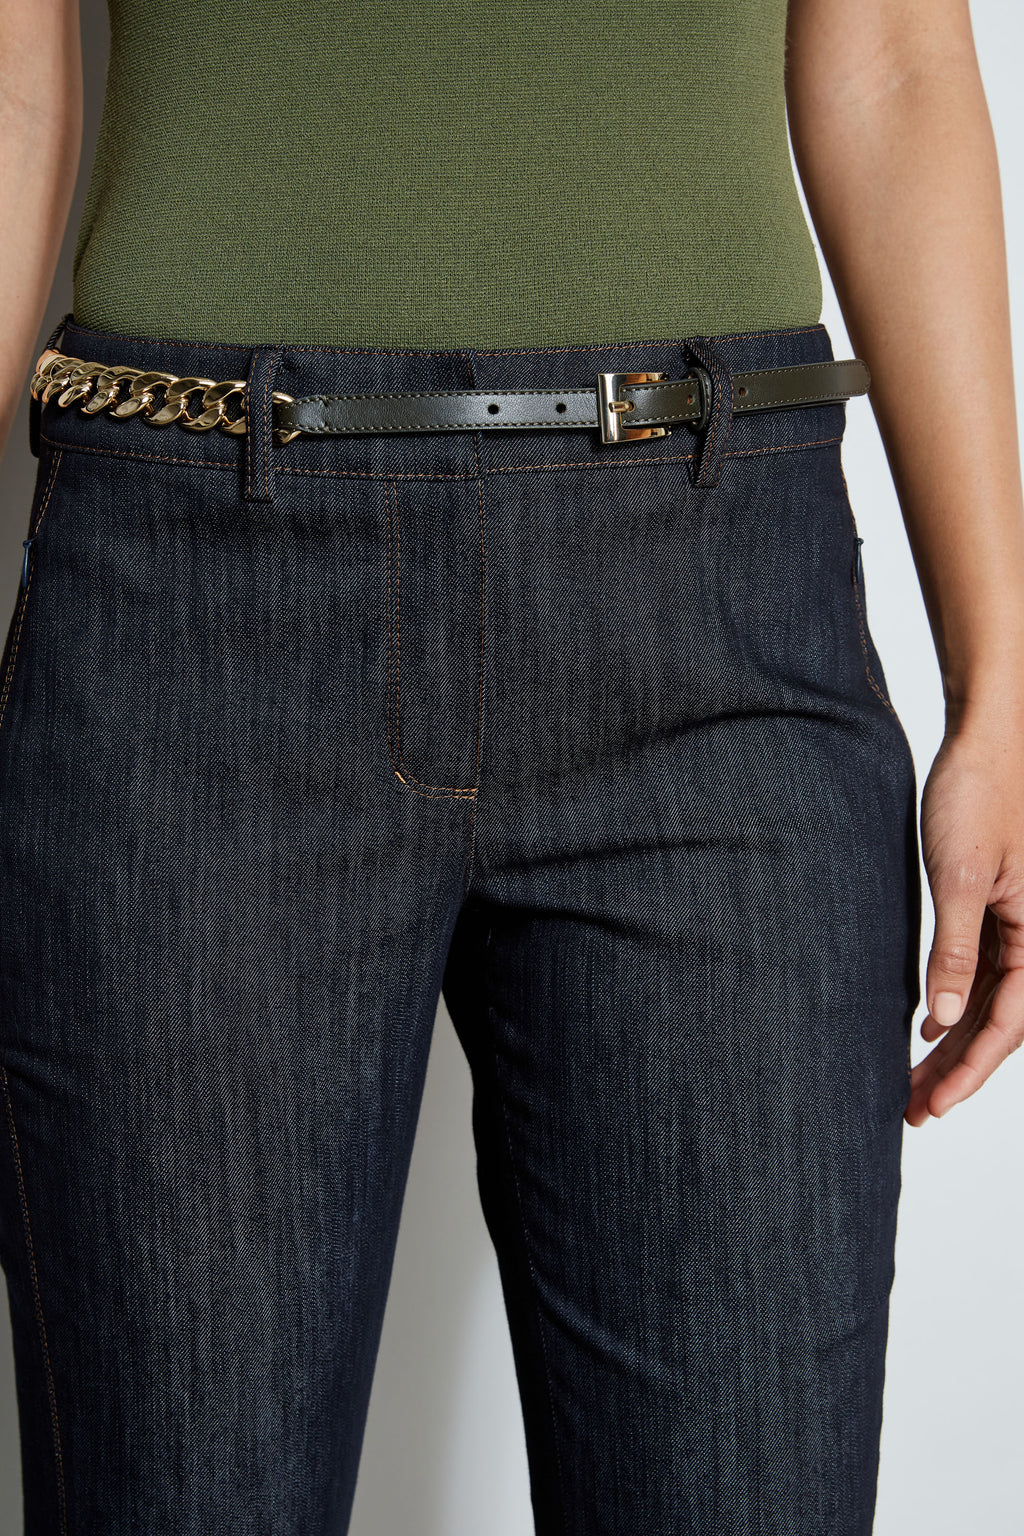 Visland Women Men Jeans Belt Chain, Fashion Single Layer or Dual Layer or Triple Layer Wallet Chain Pocket Chain Belt Chain Hip Hop Pants Chain, Adult